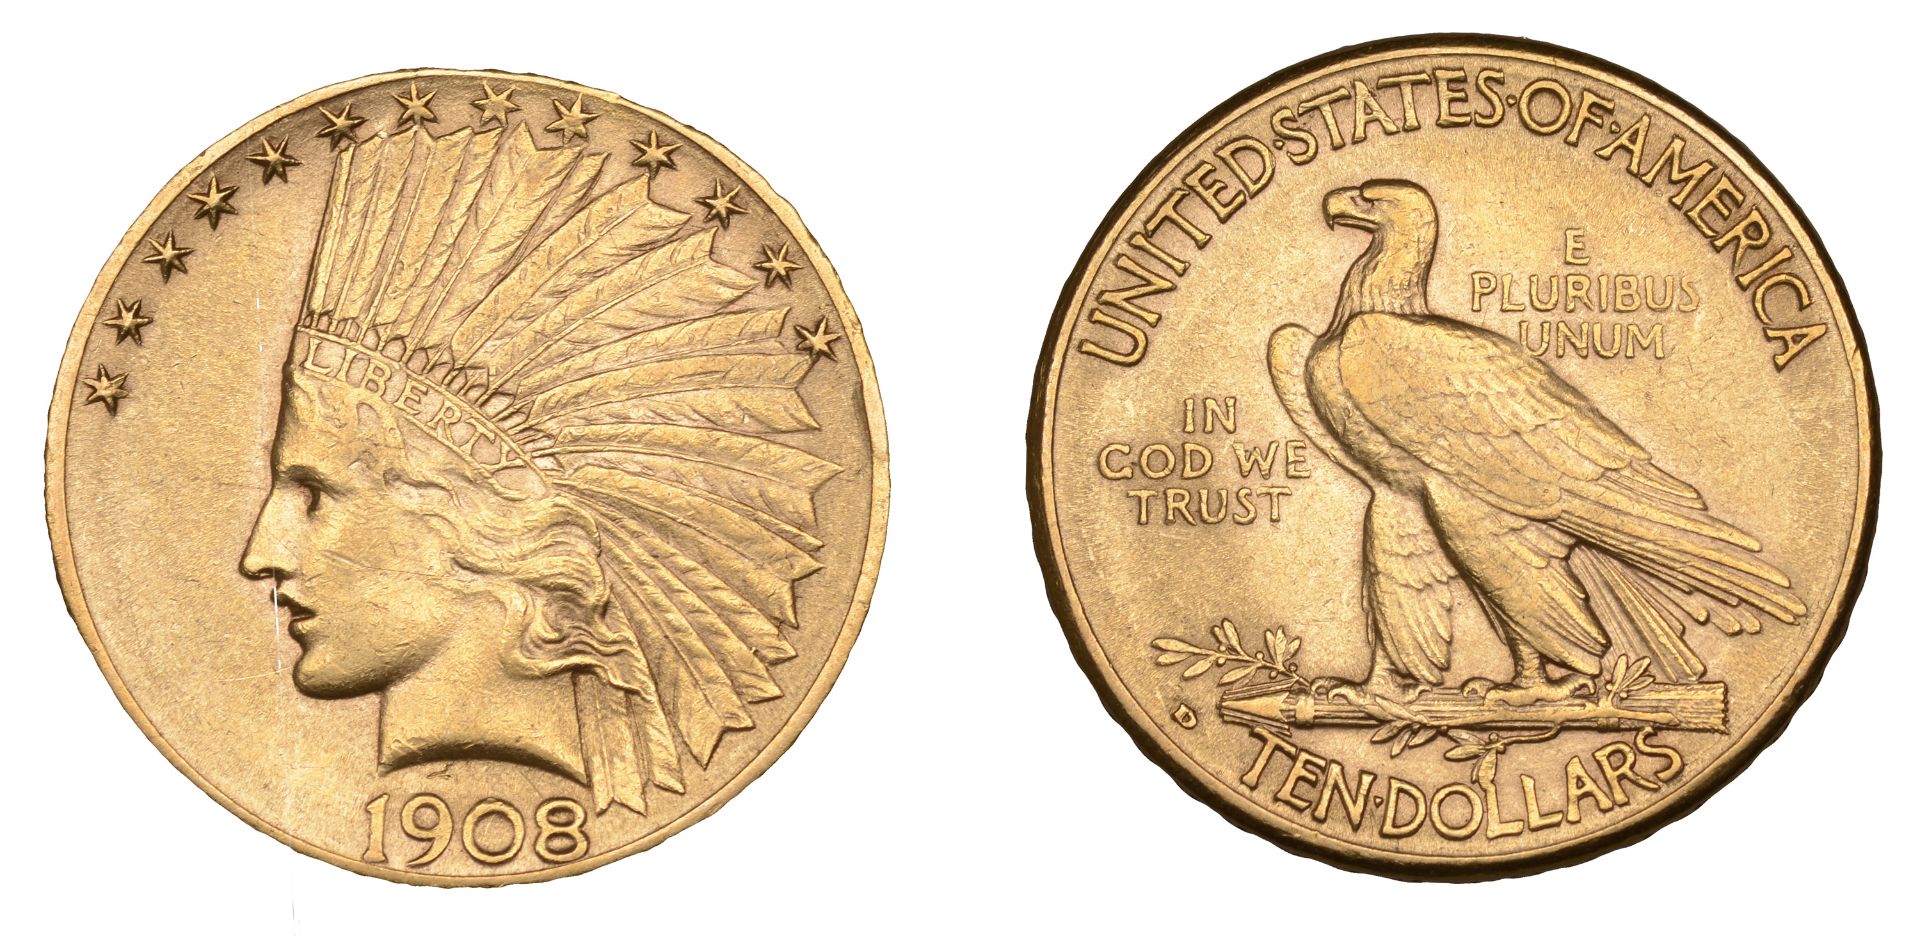 United States of America, Ten Dollars, 1908d, Indian head. Very fine Â£400-Â£500